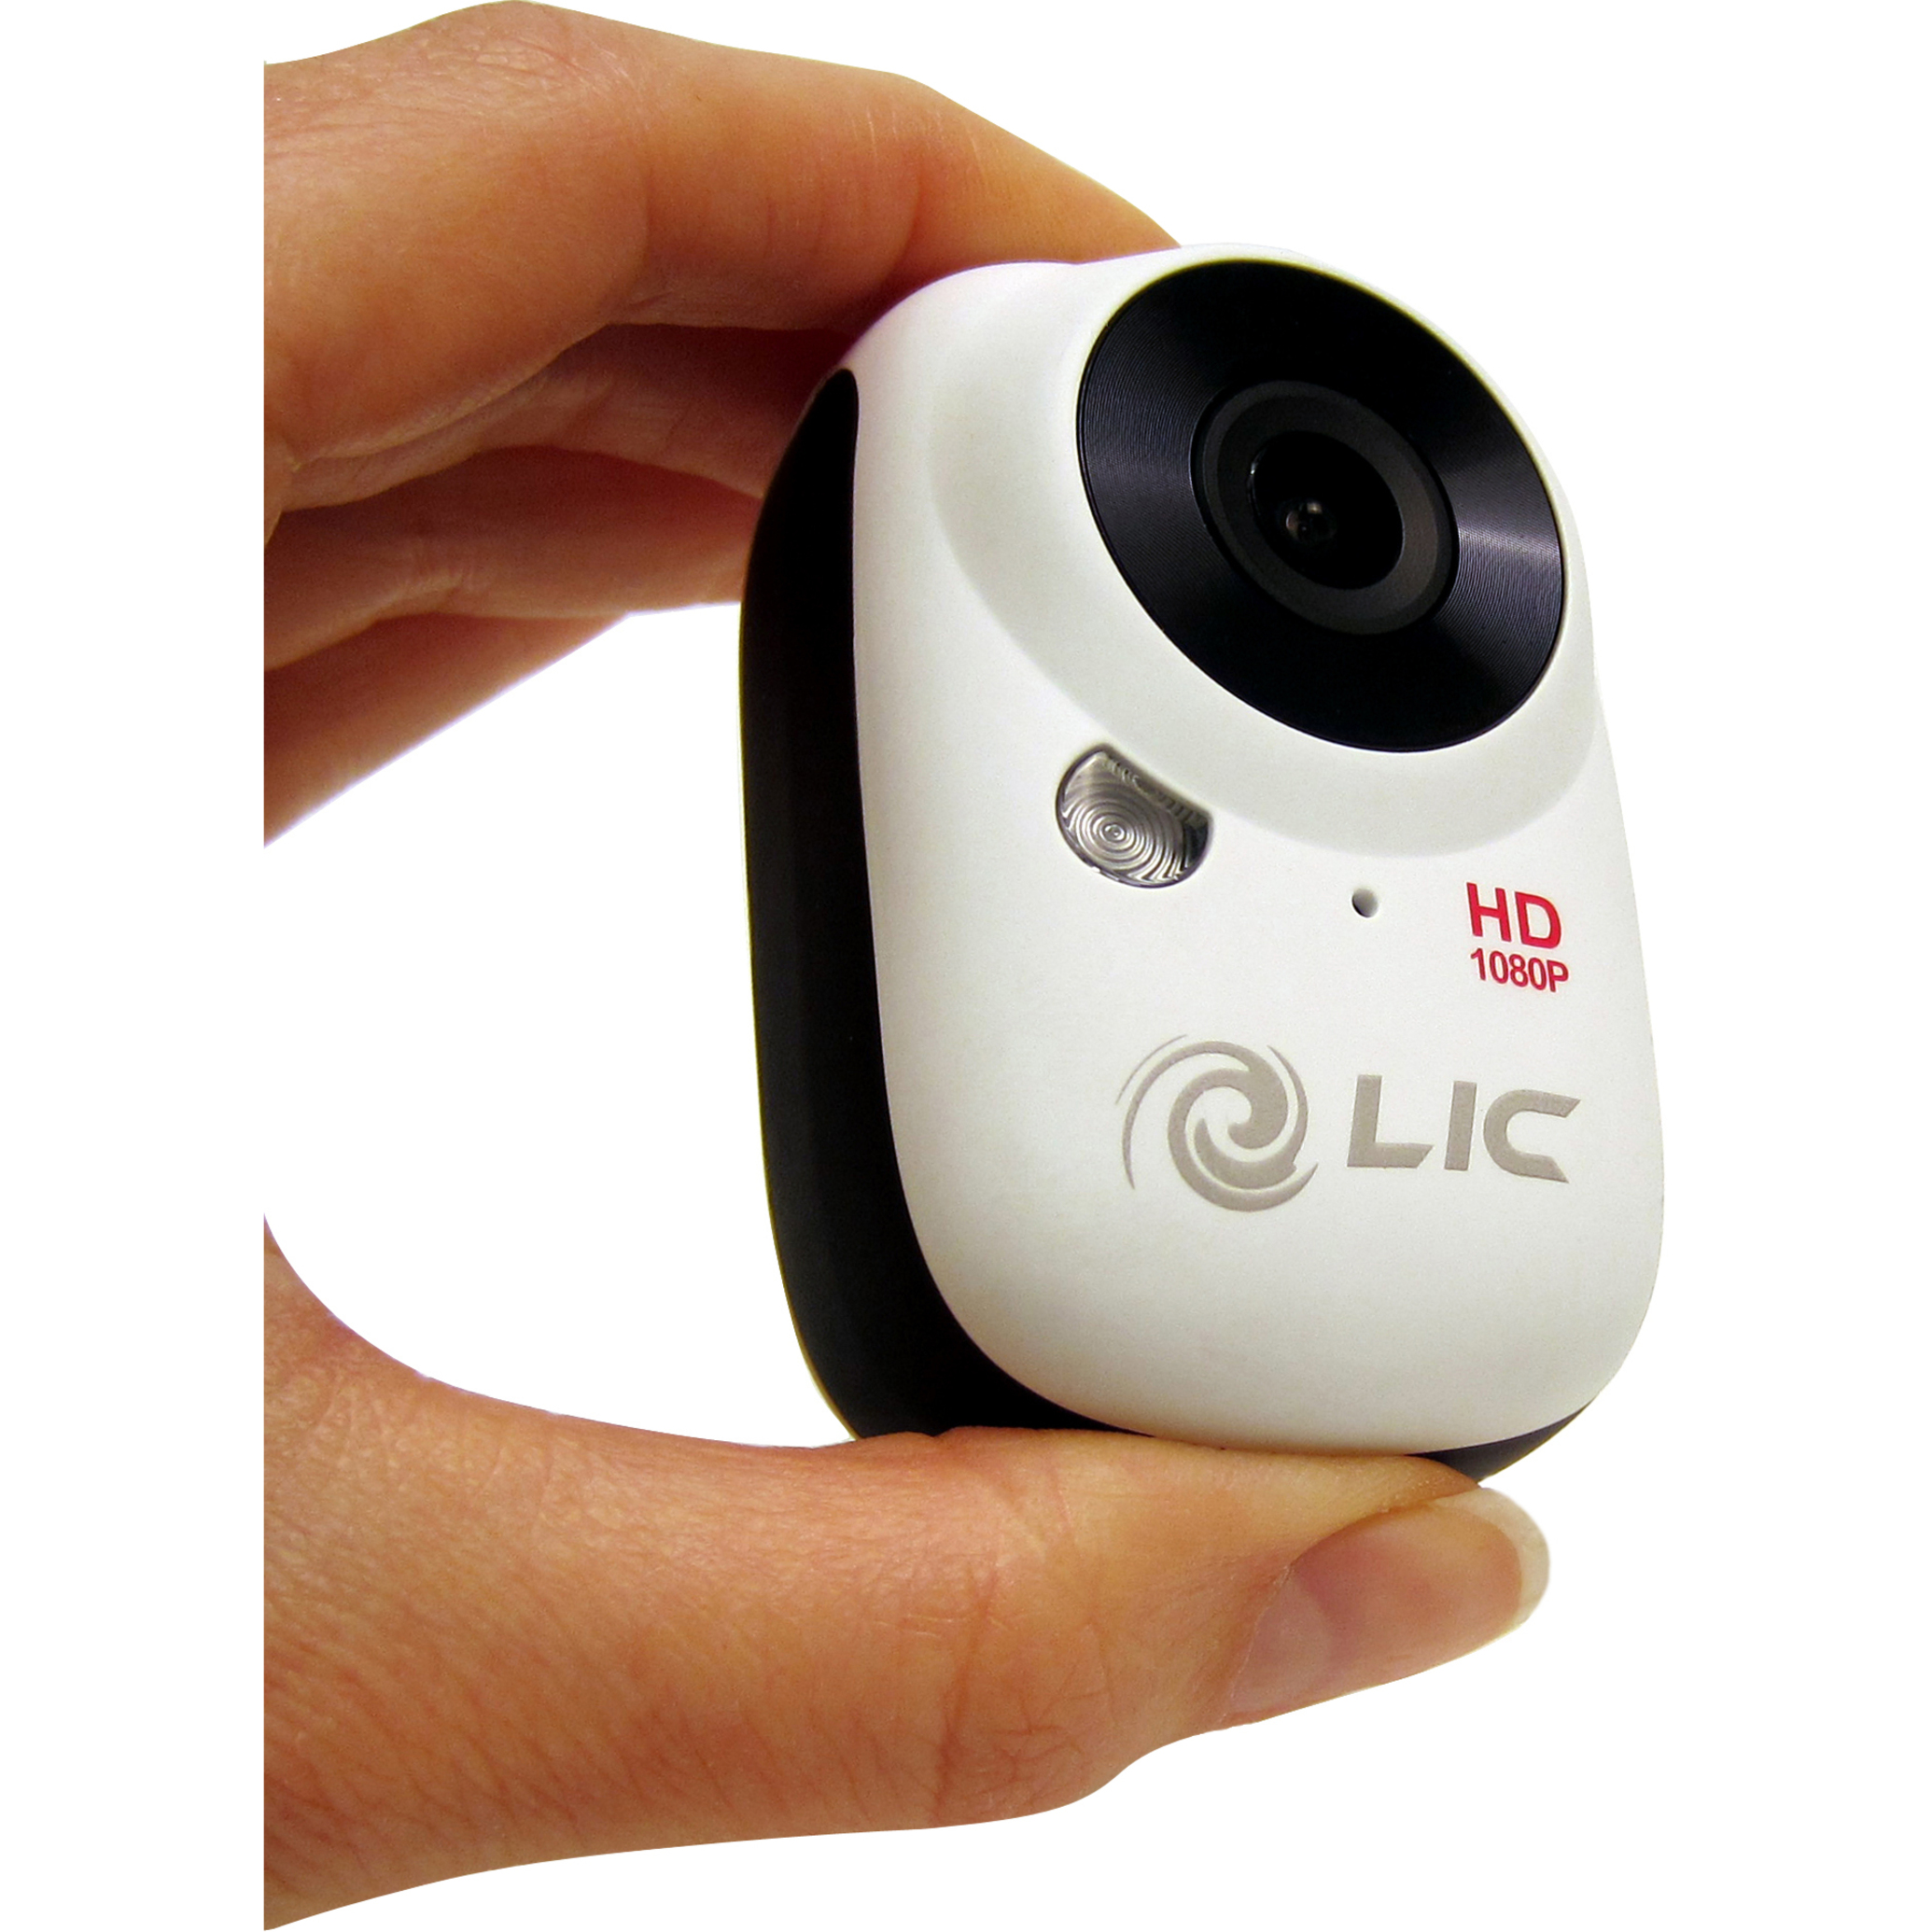 Liquid Image Digital Camcorder, LCD Screen, Full HD, Red - image 1 of 6